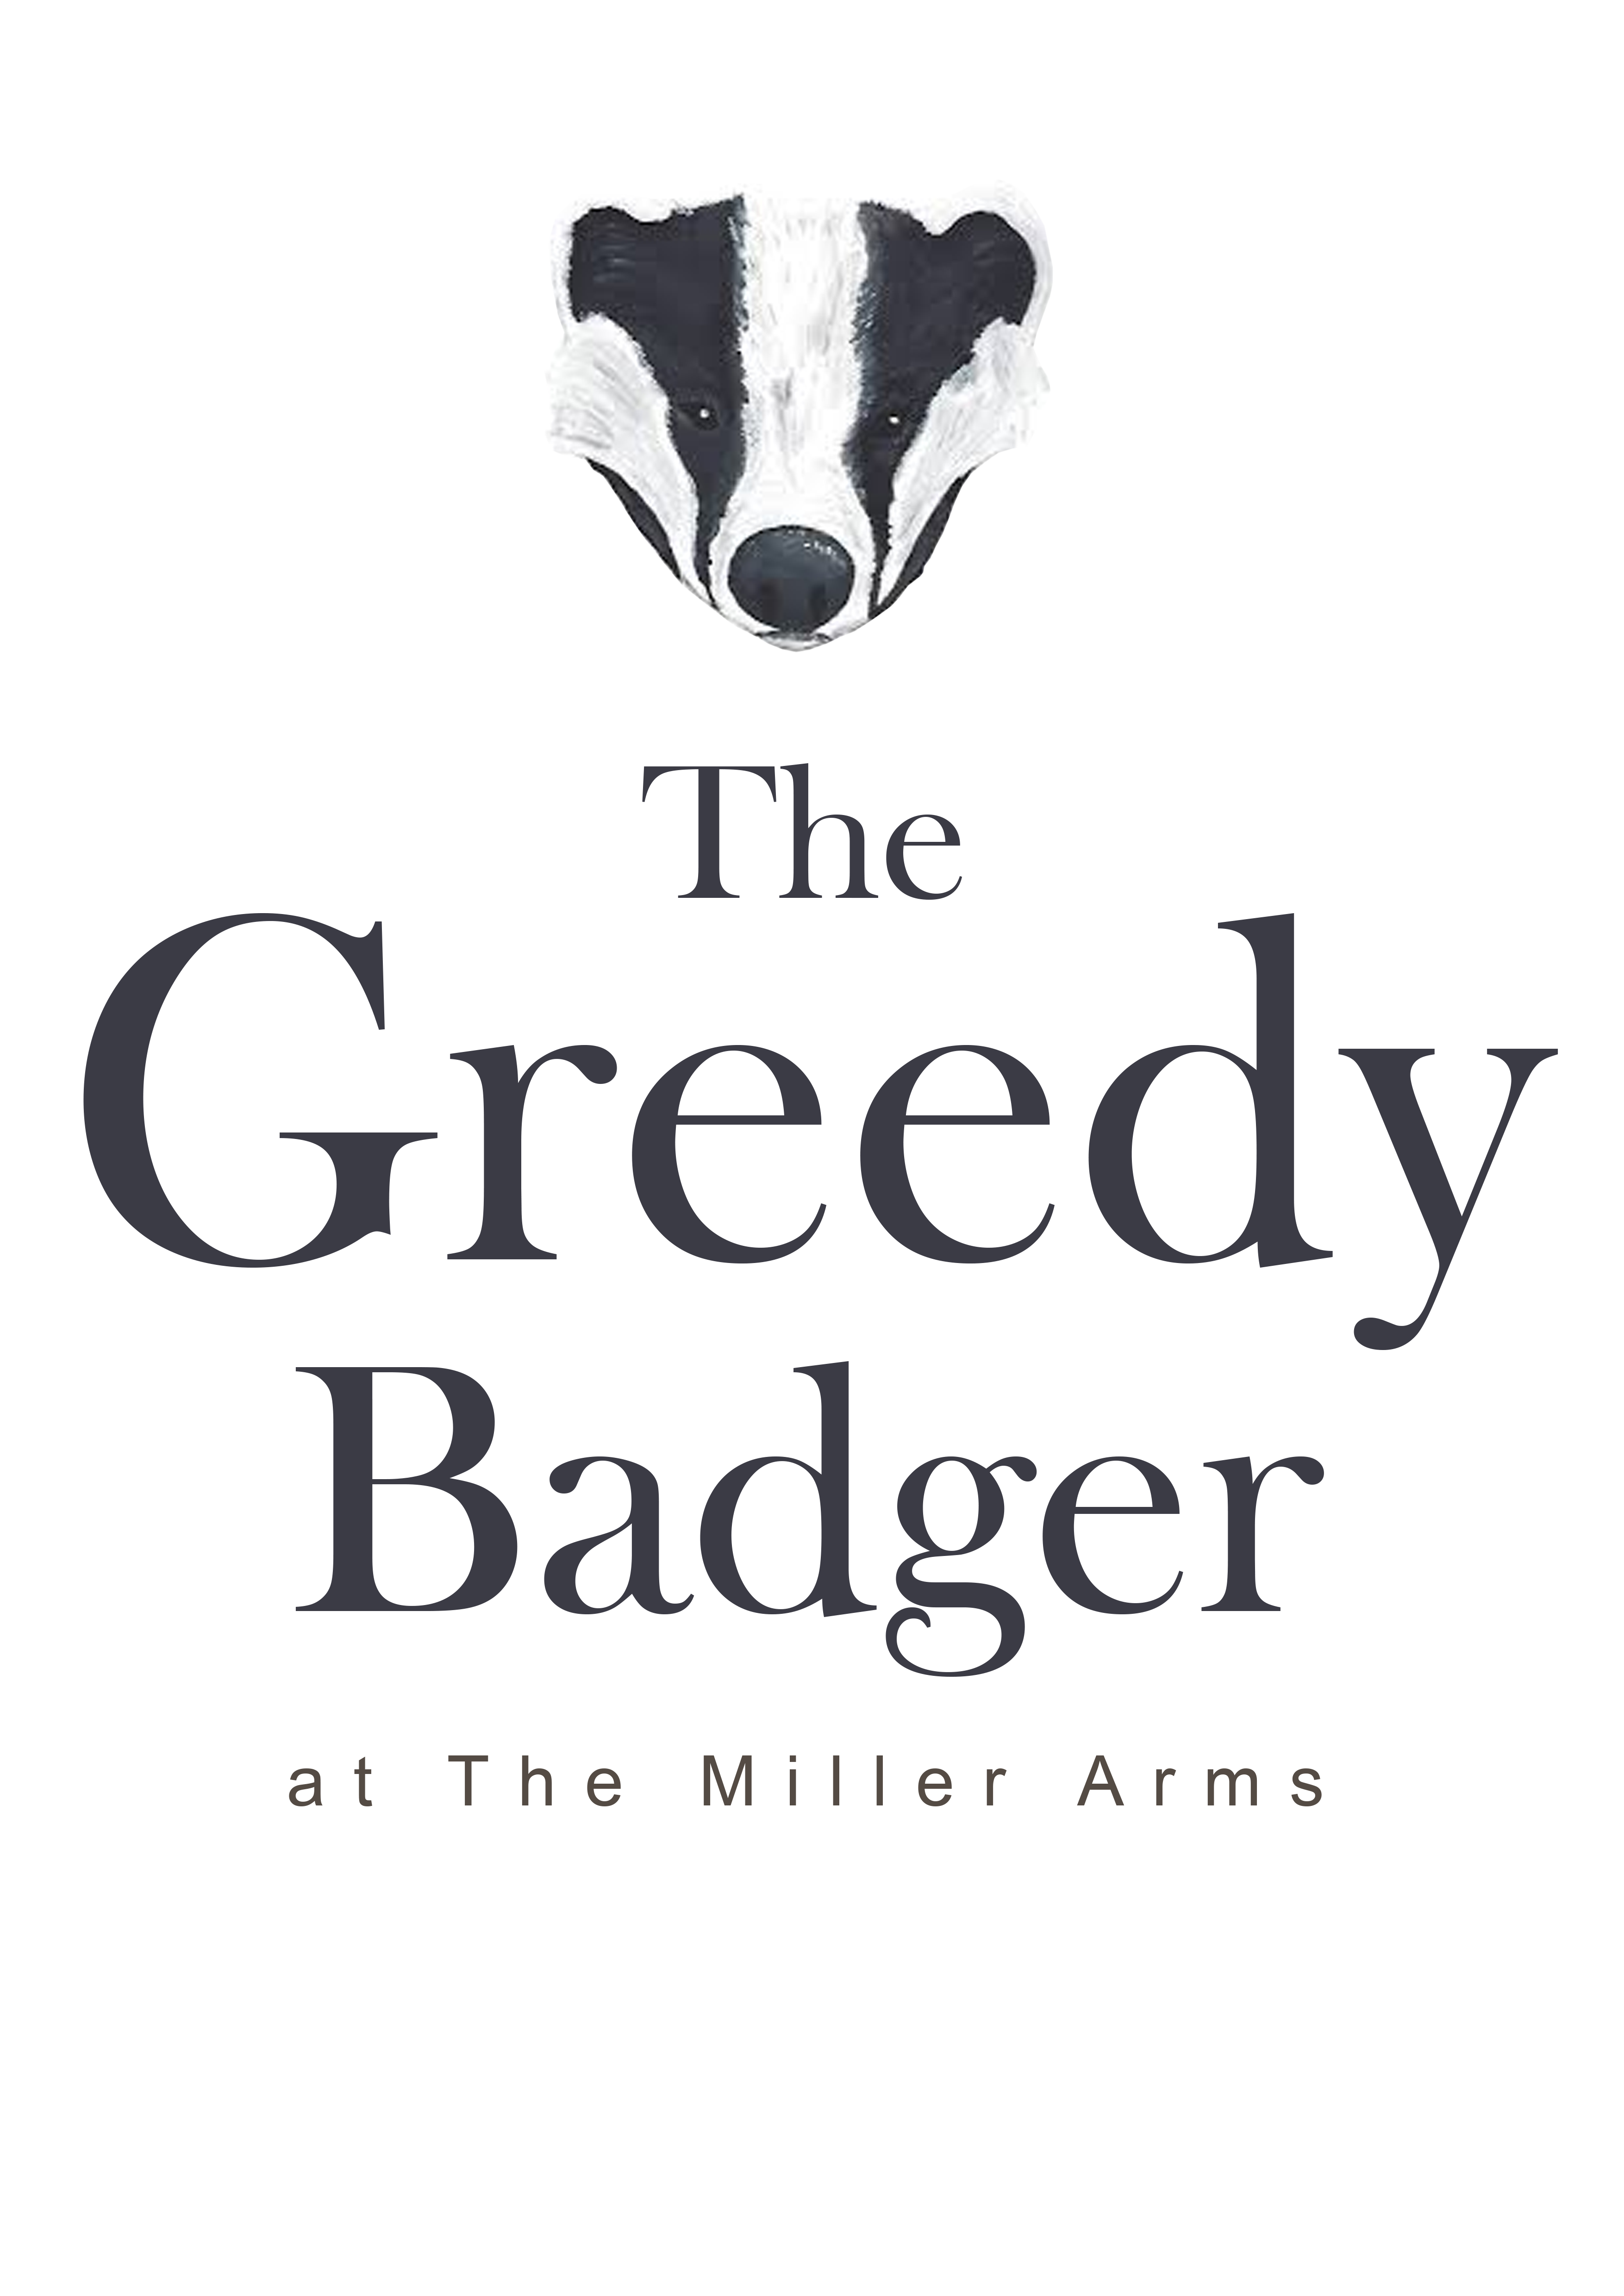 The Greedy Badger